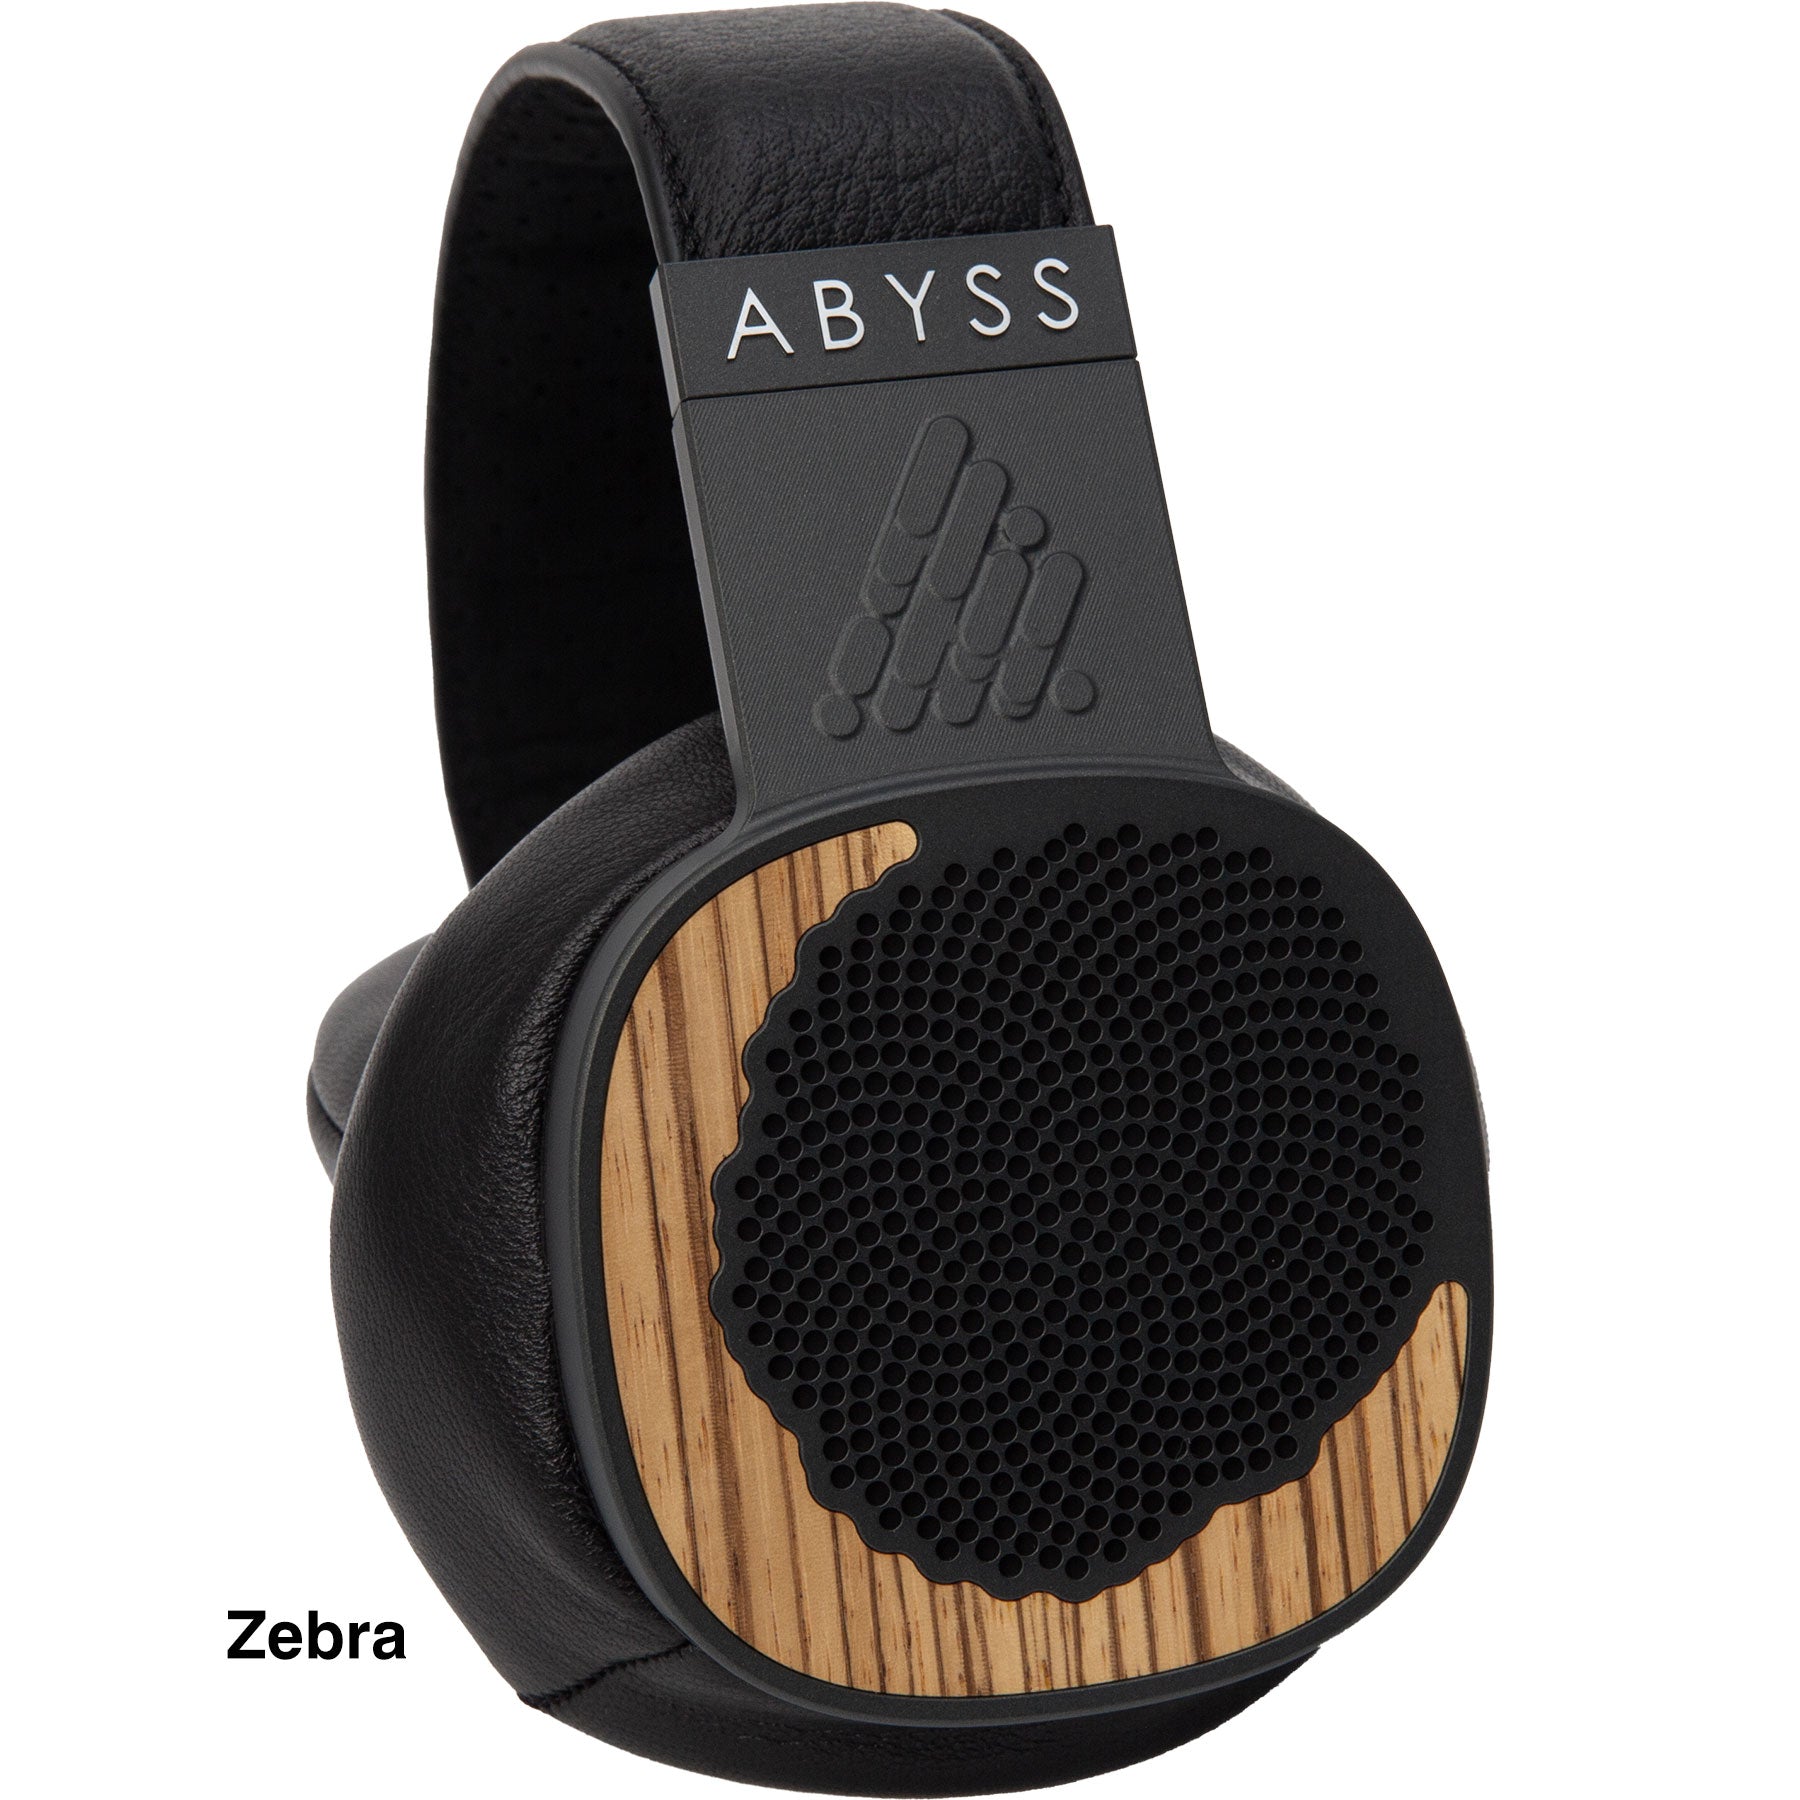 New! ABYSS DIANA MR Premium High Performance Headphone